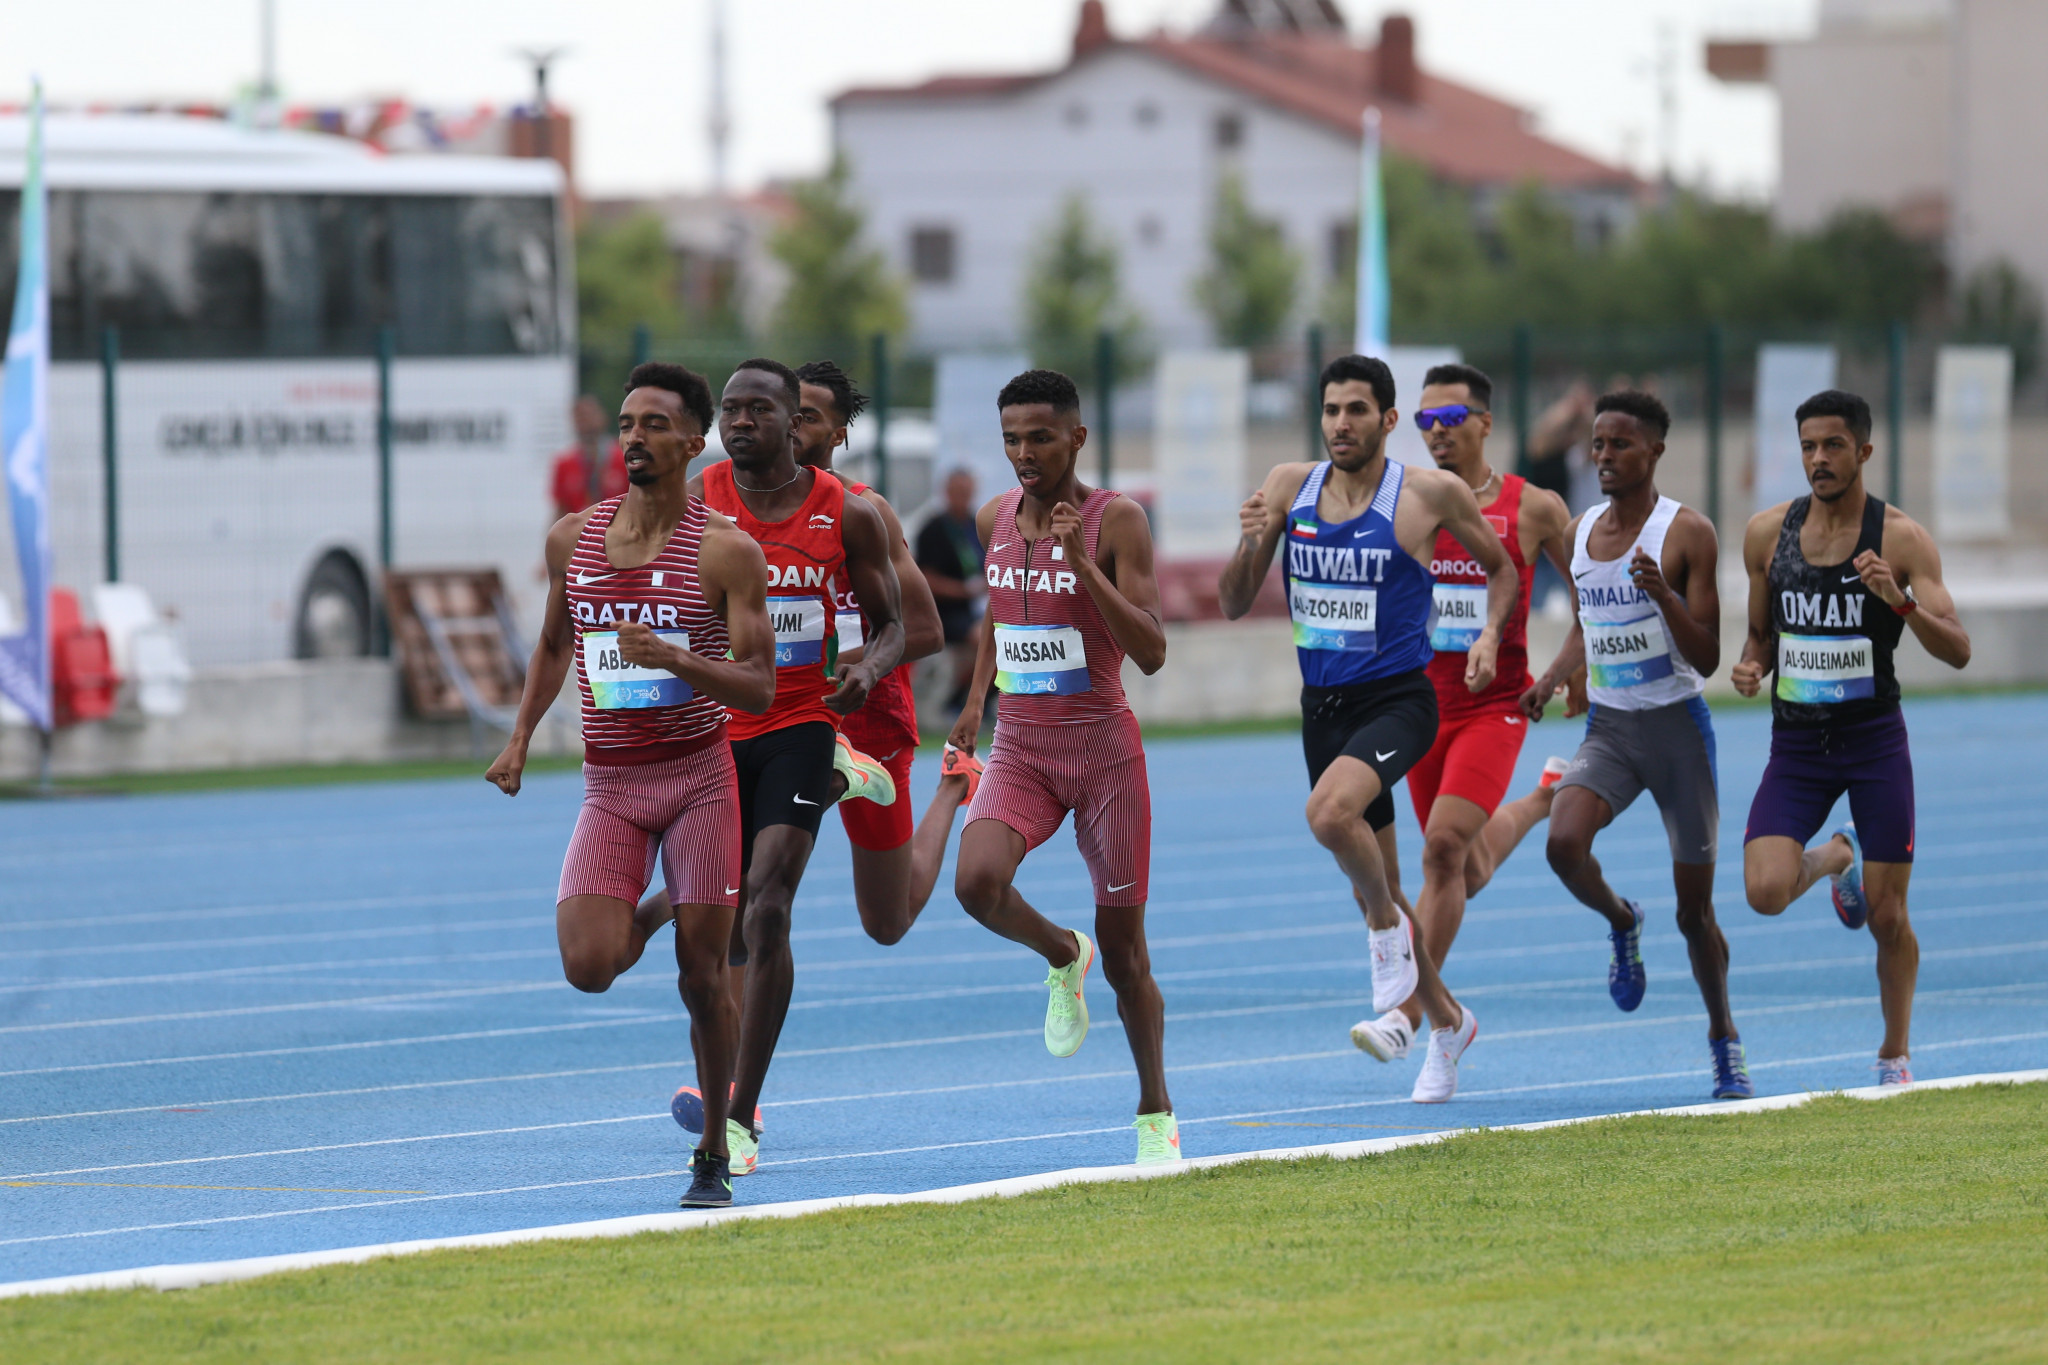 Qatar’s Abubaker Haydar Abdalla claimed the men's 800m title at the Konya Athletic Field ©Konya 2021